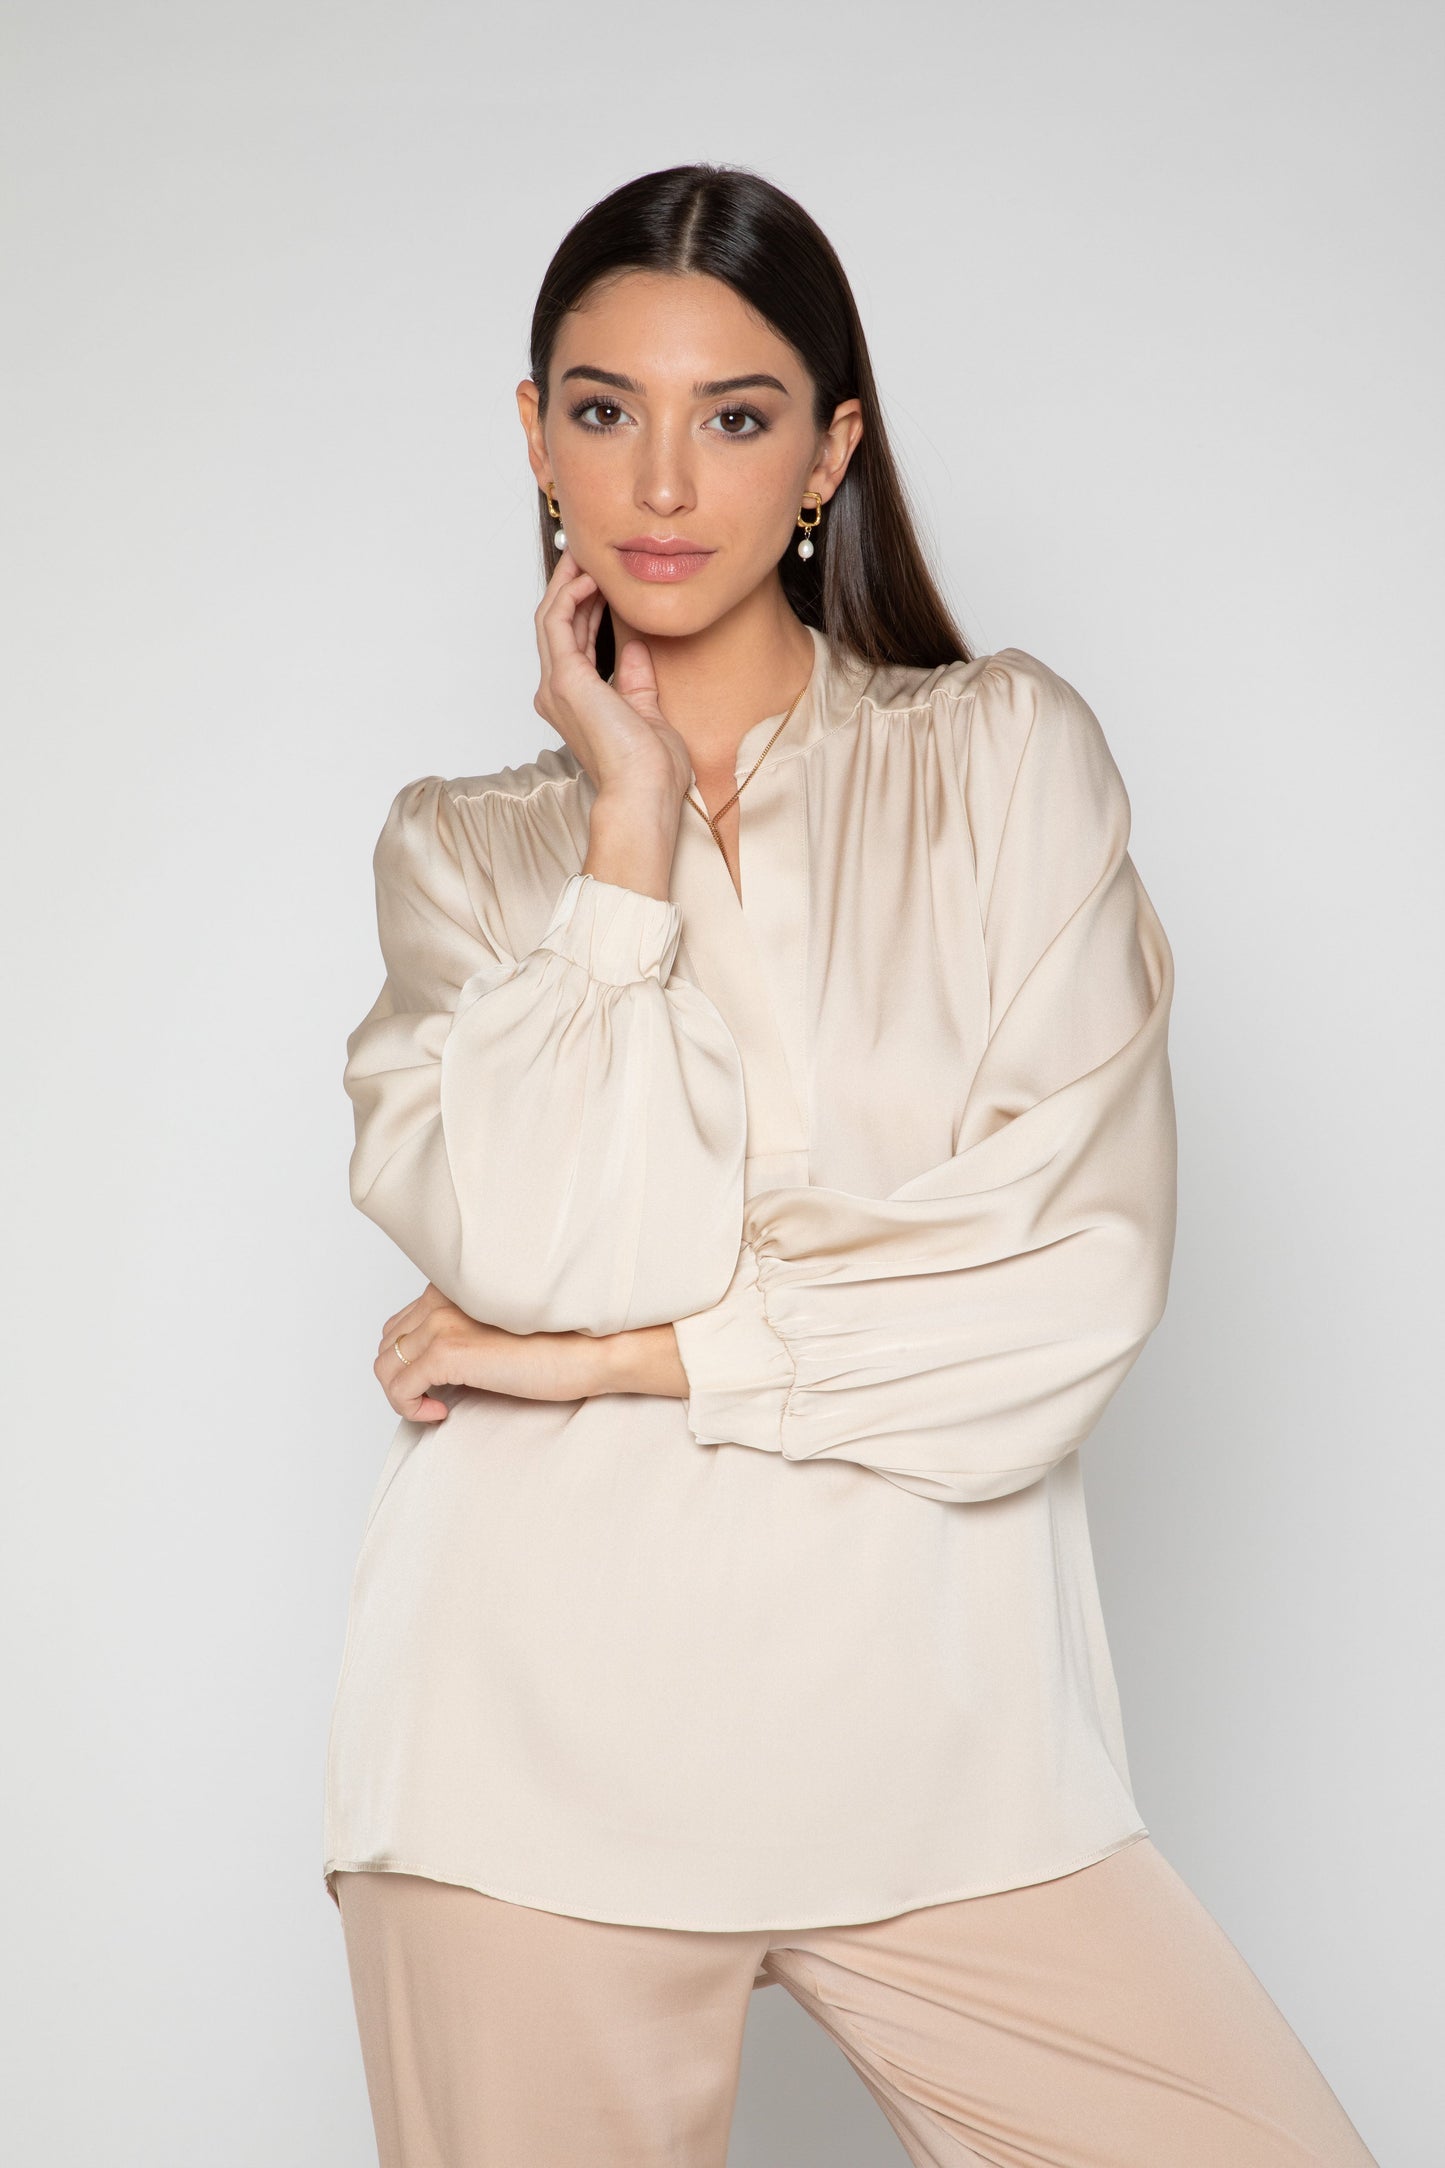 Madras blouse - nouvelle white General silk95five